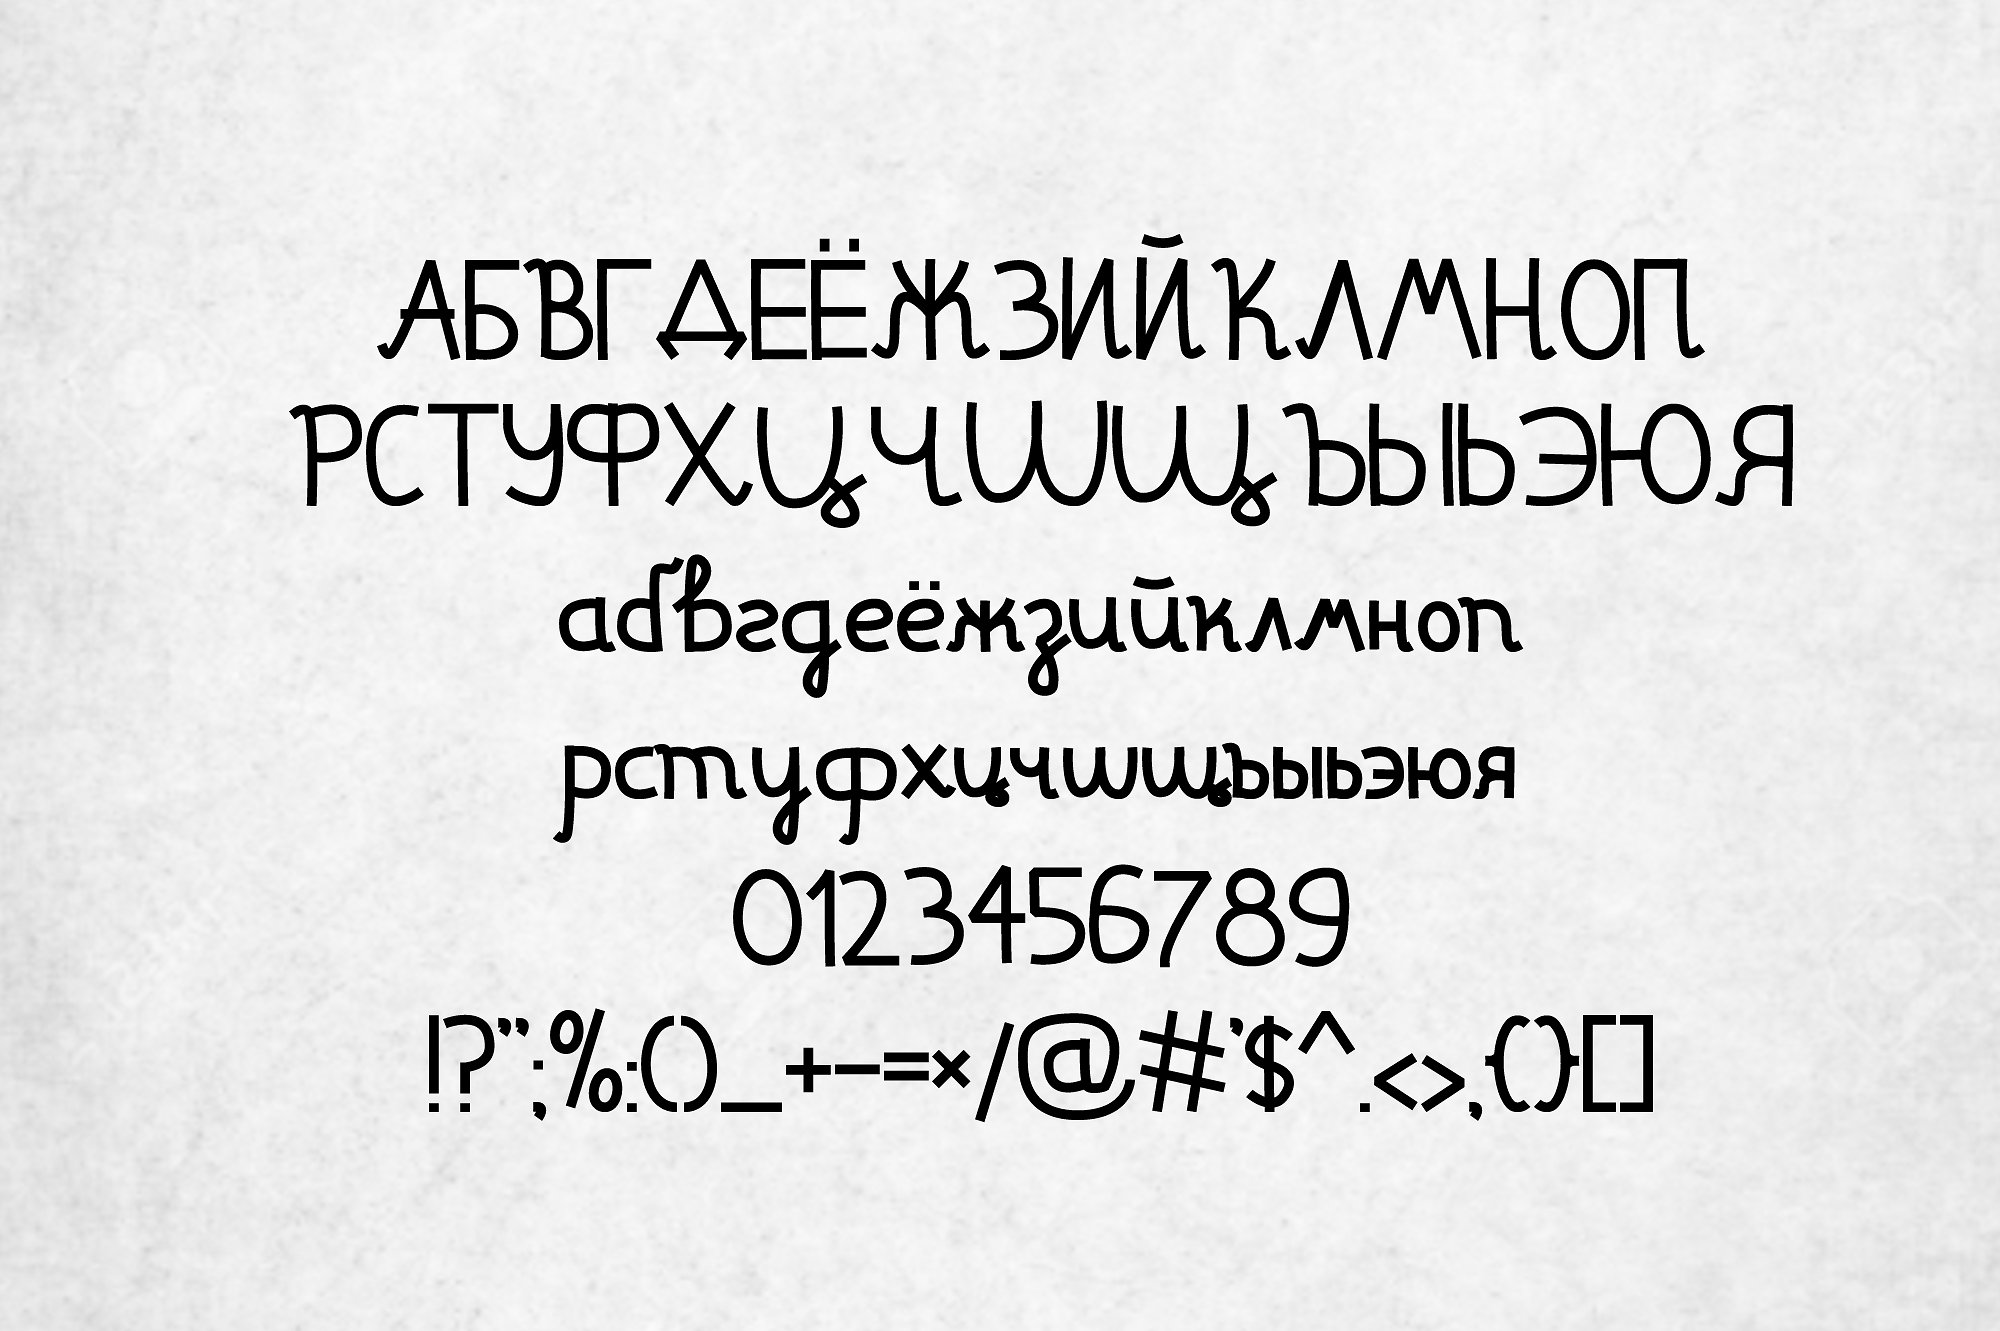 Font Edison (latin and cyrillic)